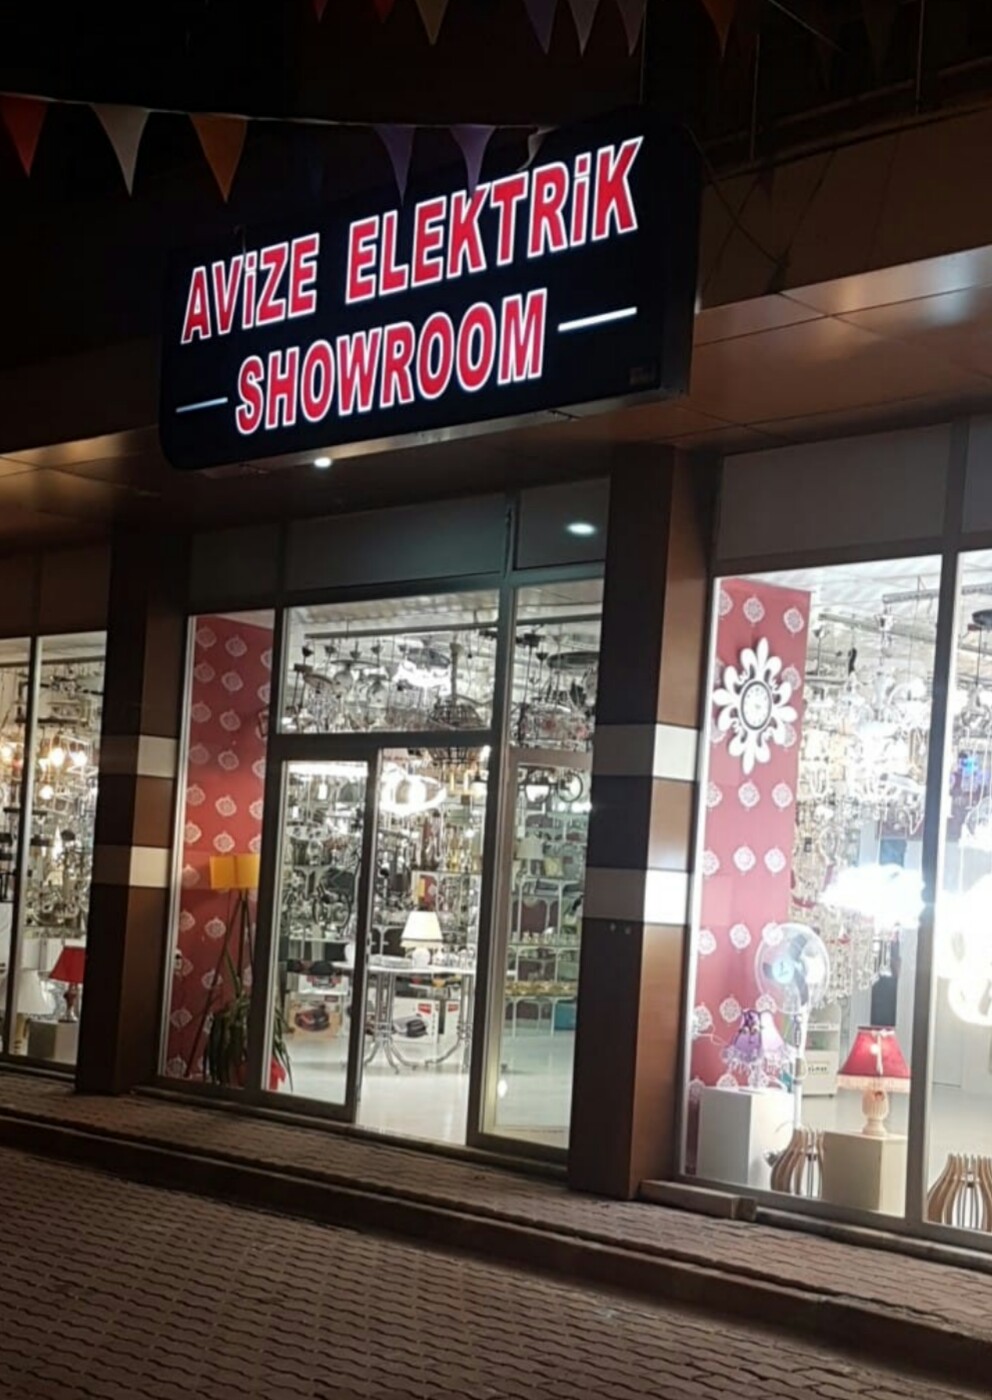 AVZE ELEKTRK SHOWROM 2019